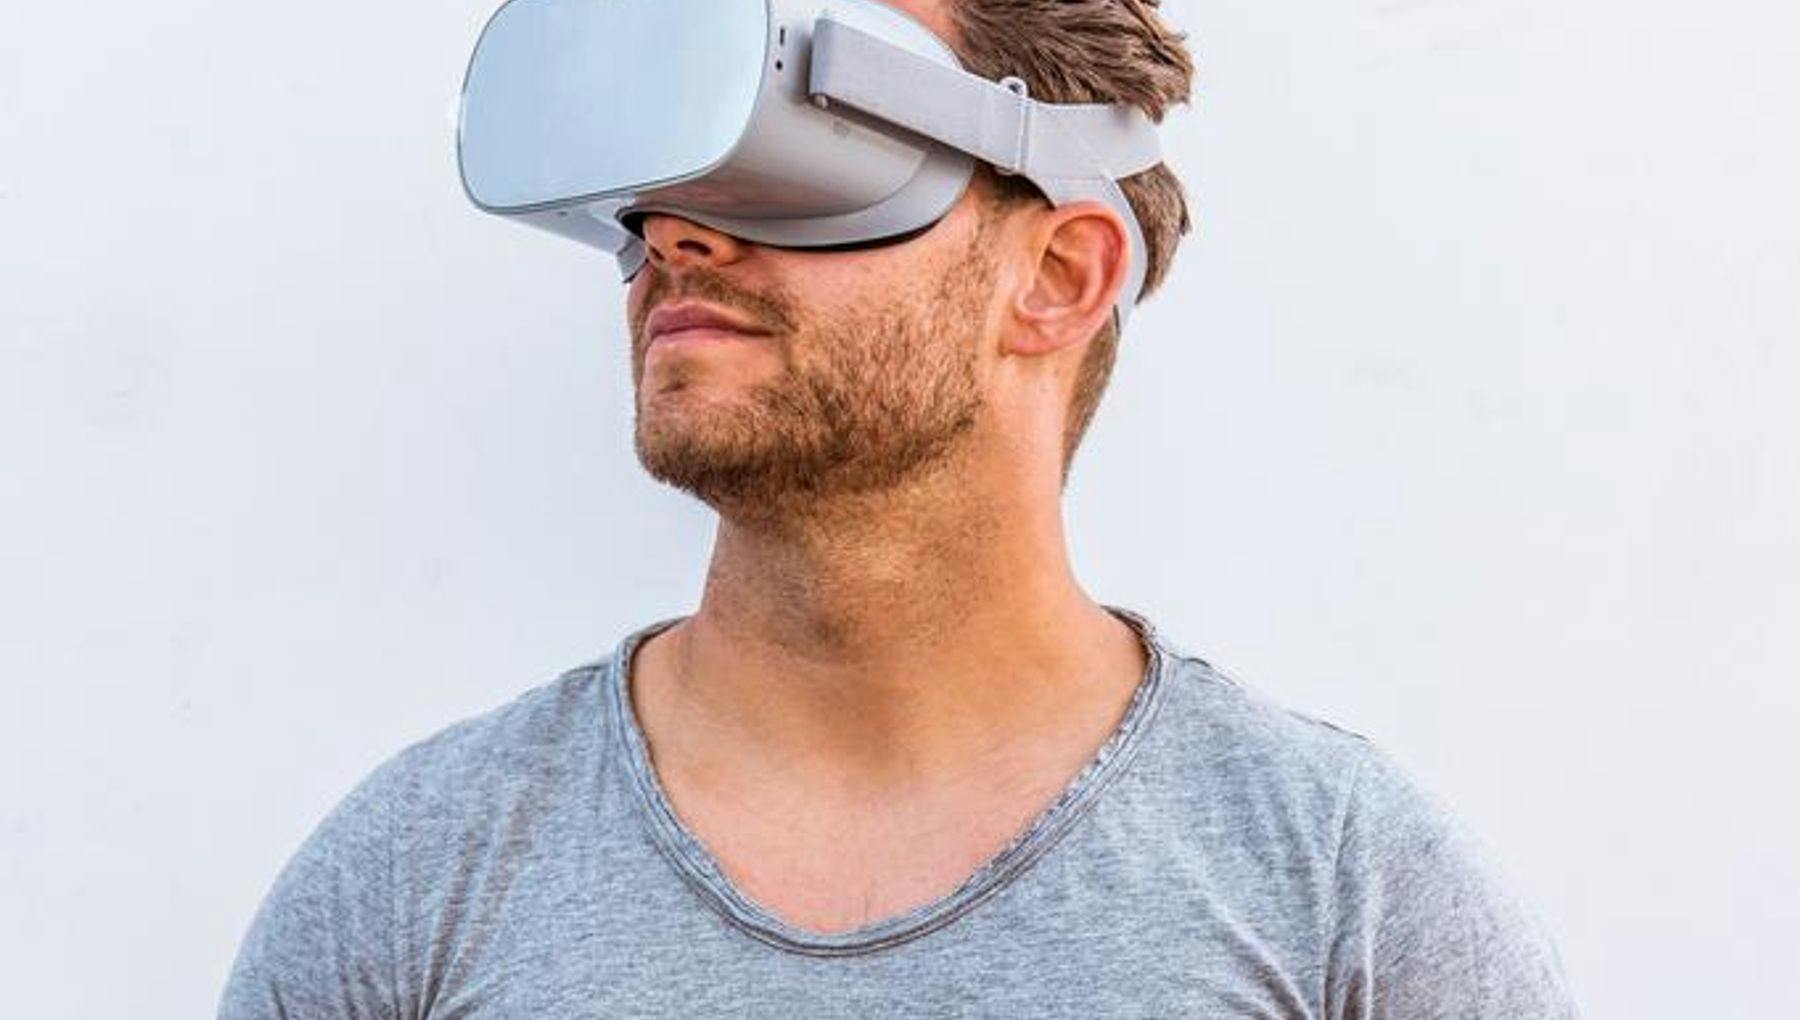 A man wearing virtual reality glasses